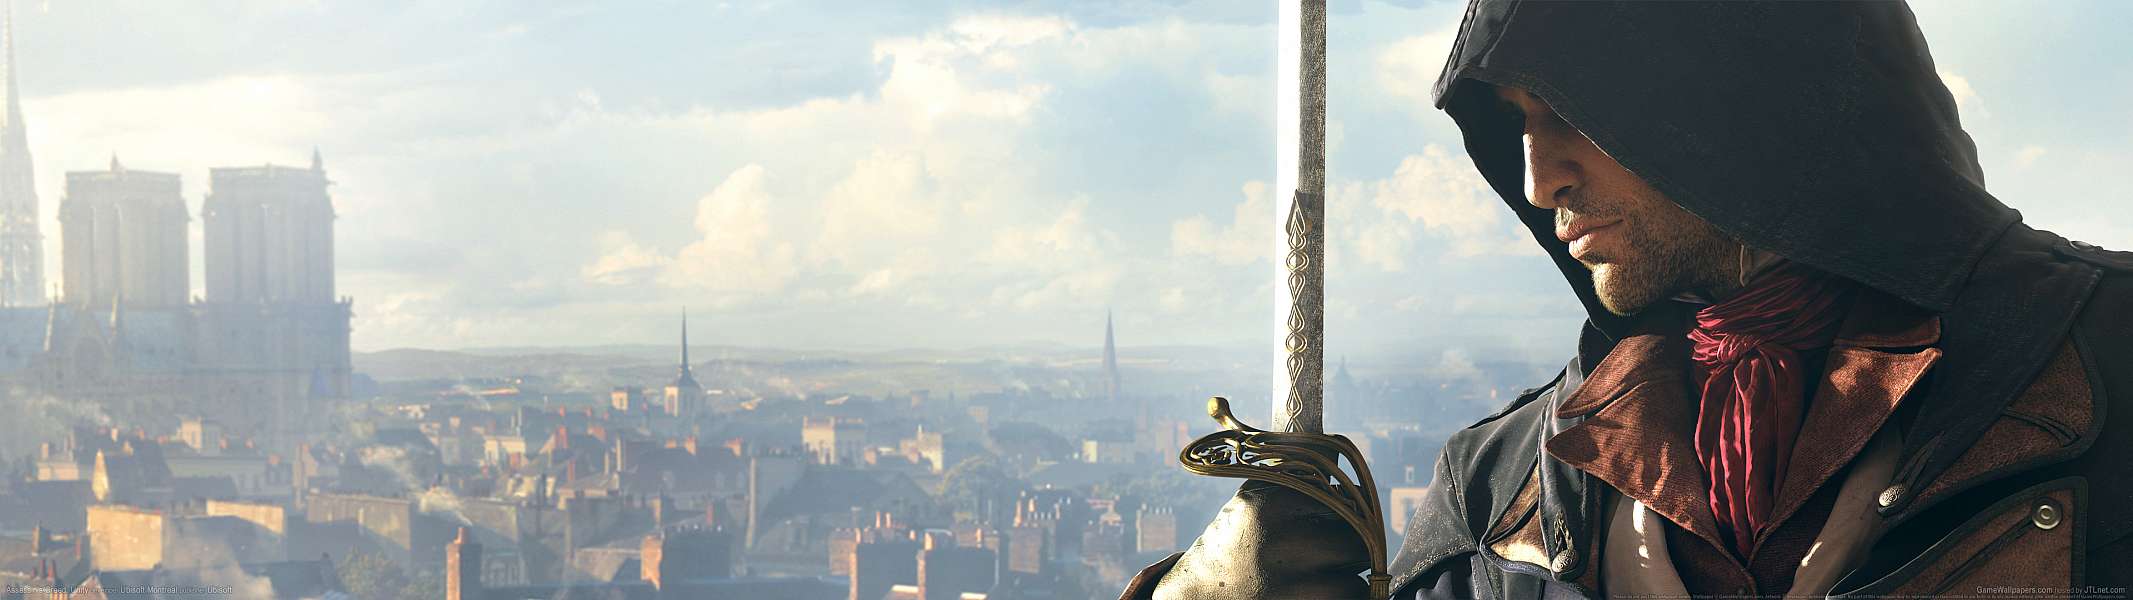 Assassin's Creed: Unity dual screen fondo de escritorio